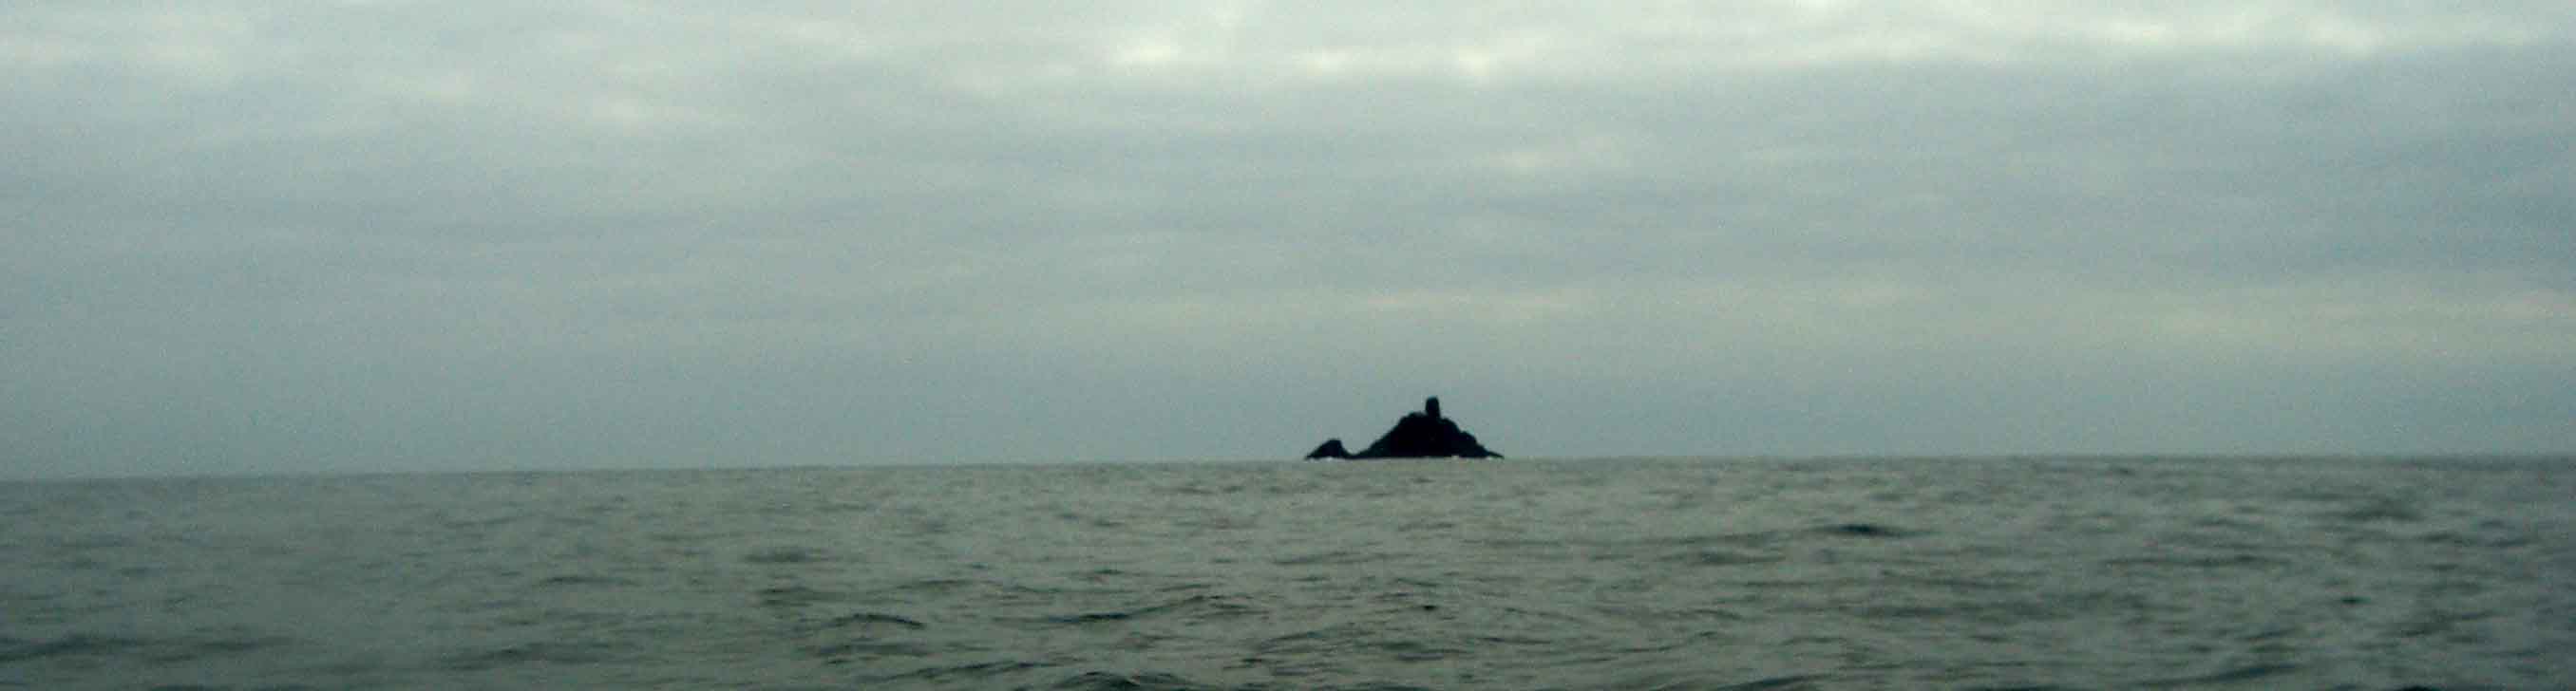 dursey island